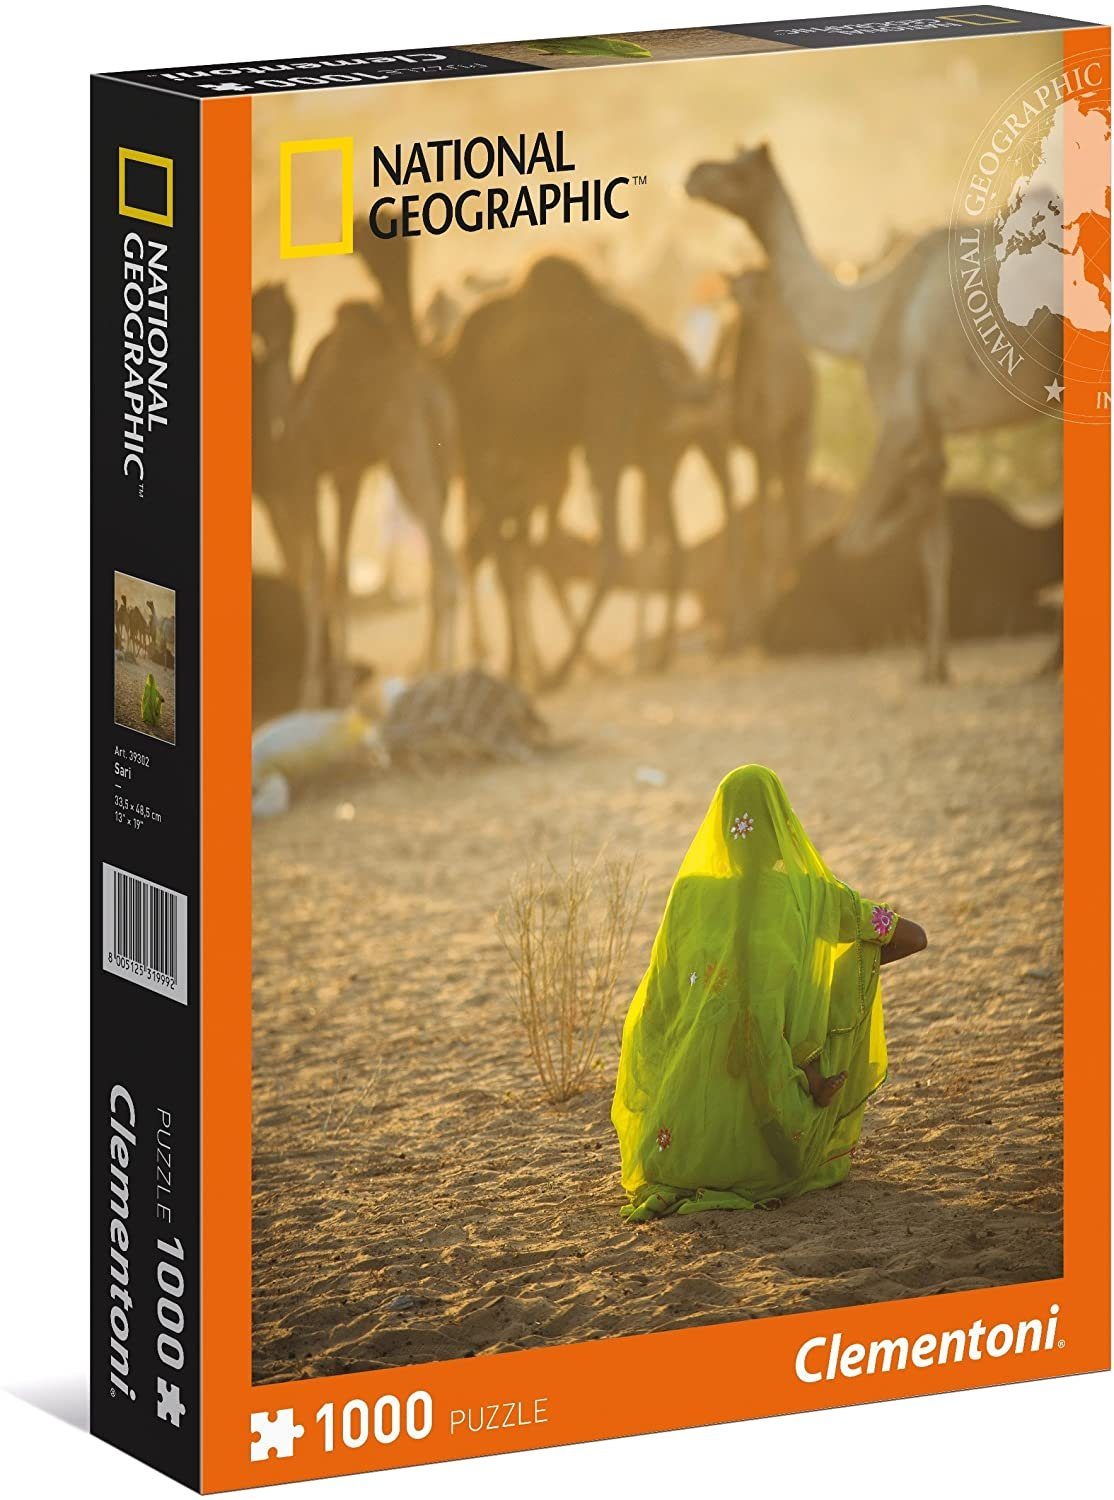 Clementoni® Puzzle Clementoni Puzzle National Geographic "Sari" 1000 Teile, 1000 Puzzleteile